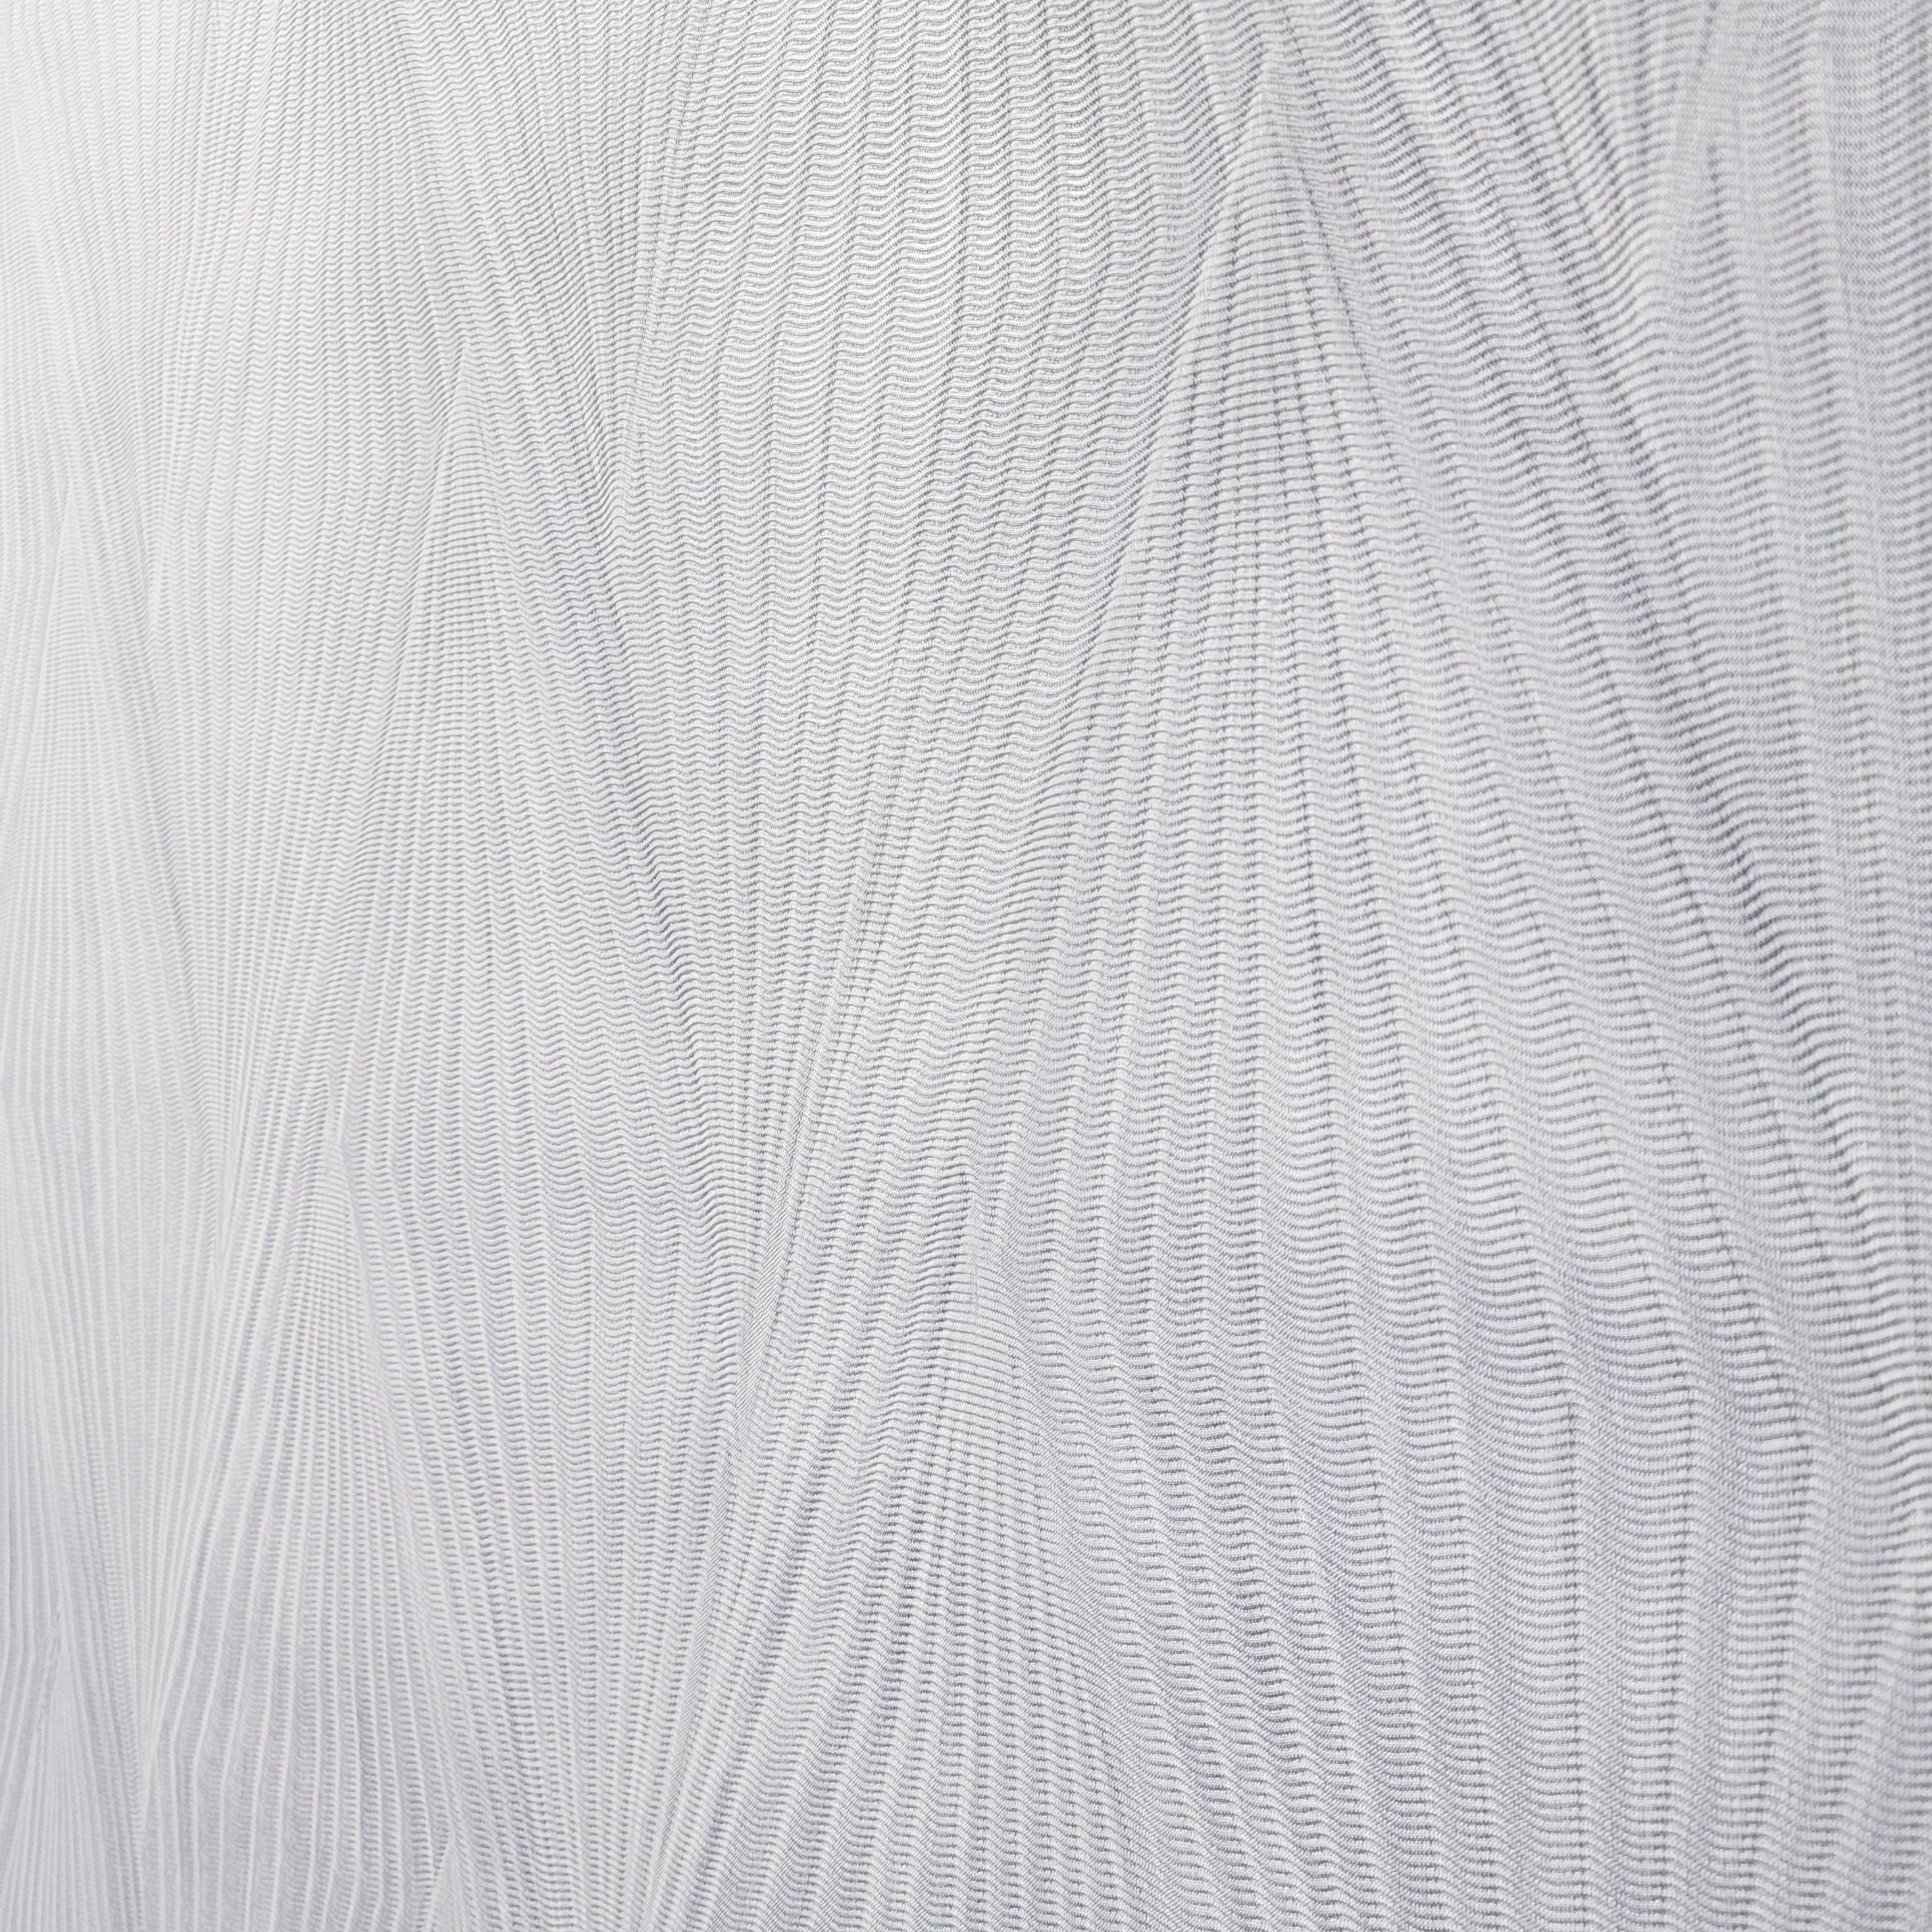 Z90053 LAMBORGHINI 2 abstract wavy textured gray off white faux 